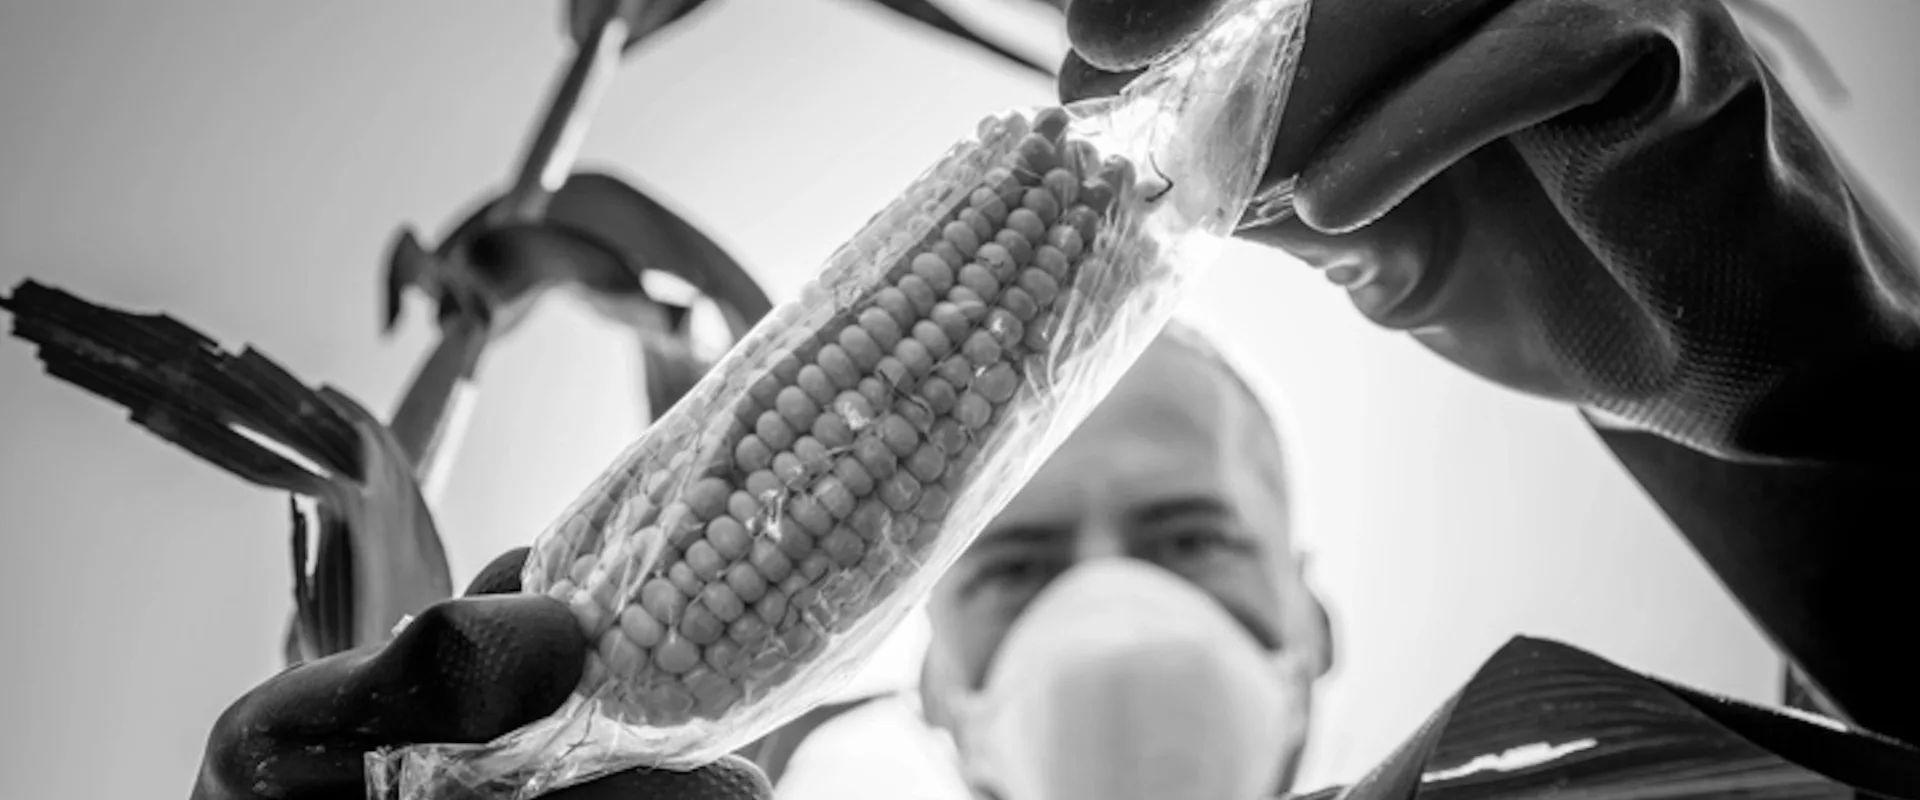 SENSOGM - sensori biotofonici per la determinazione di OGM